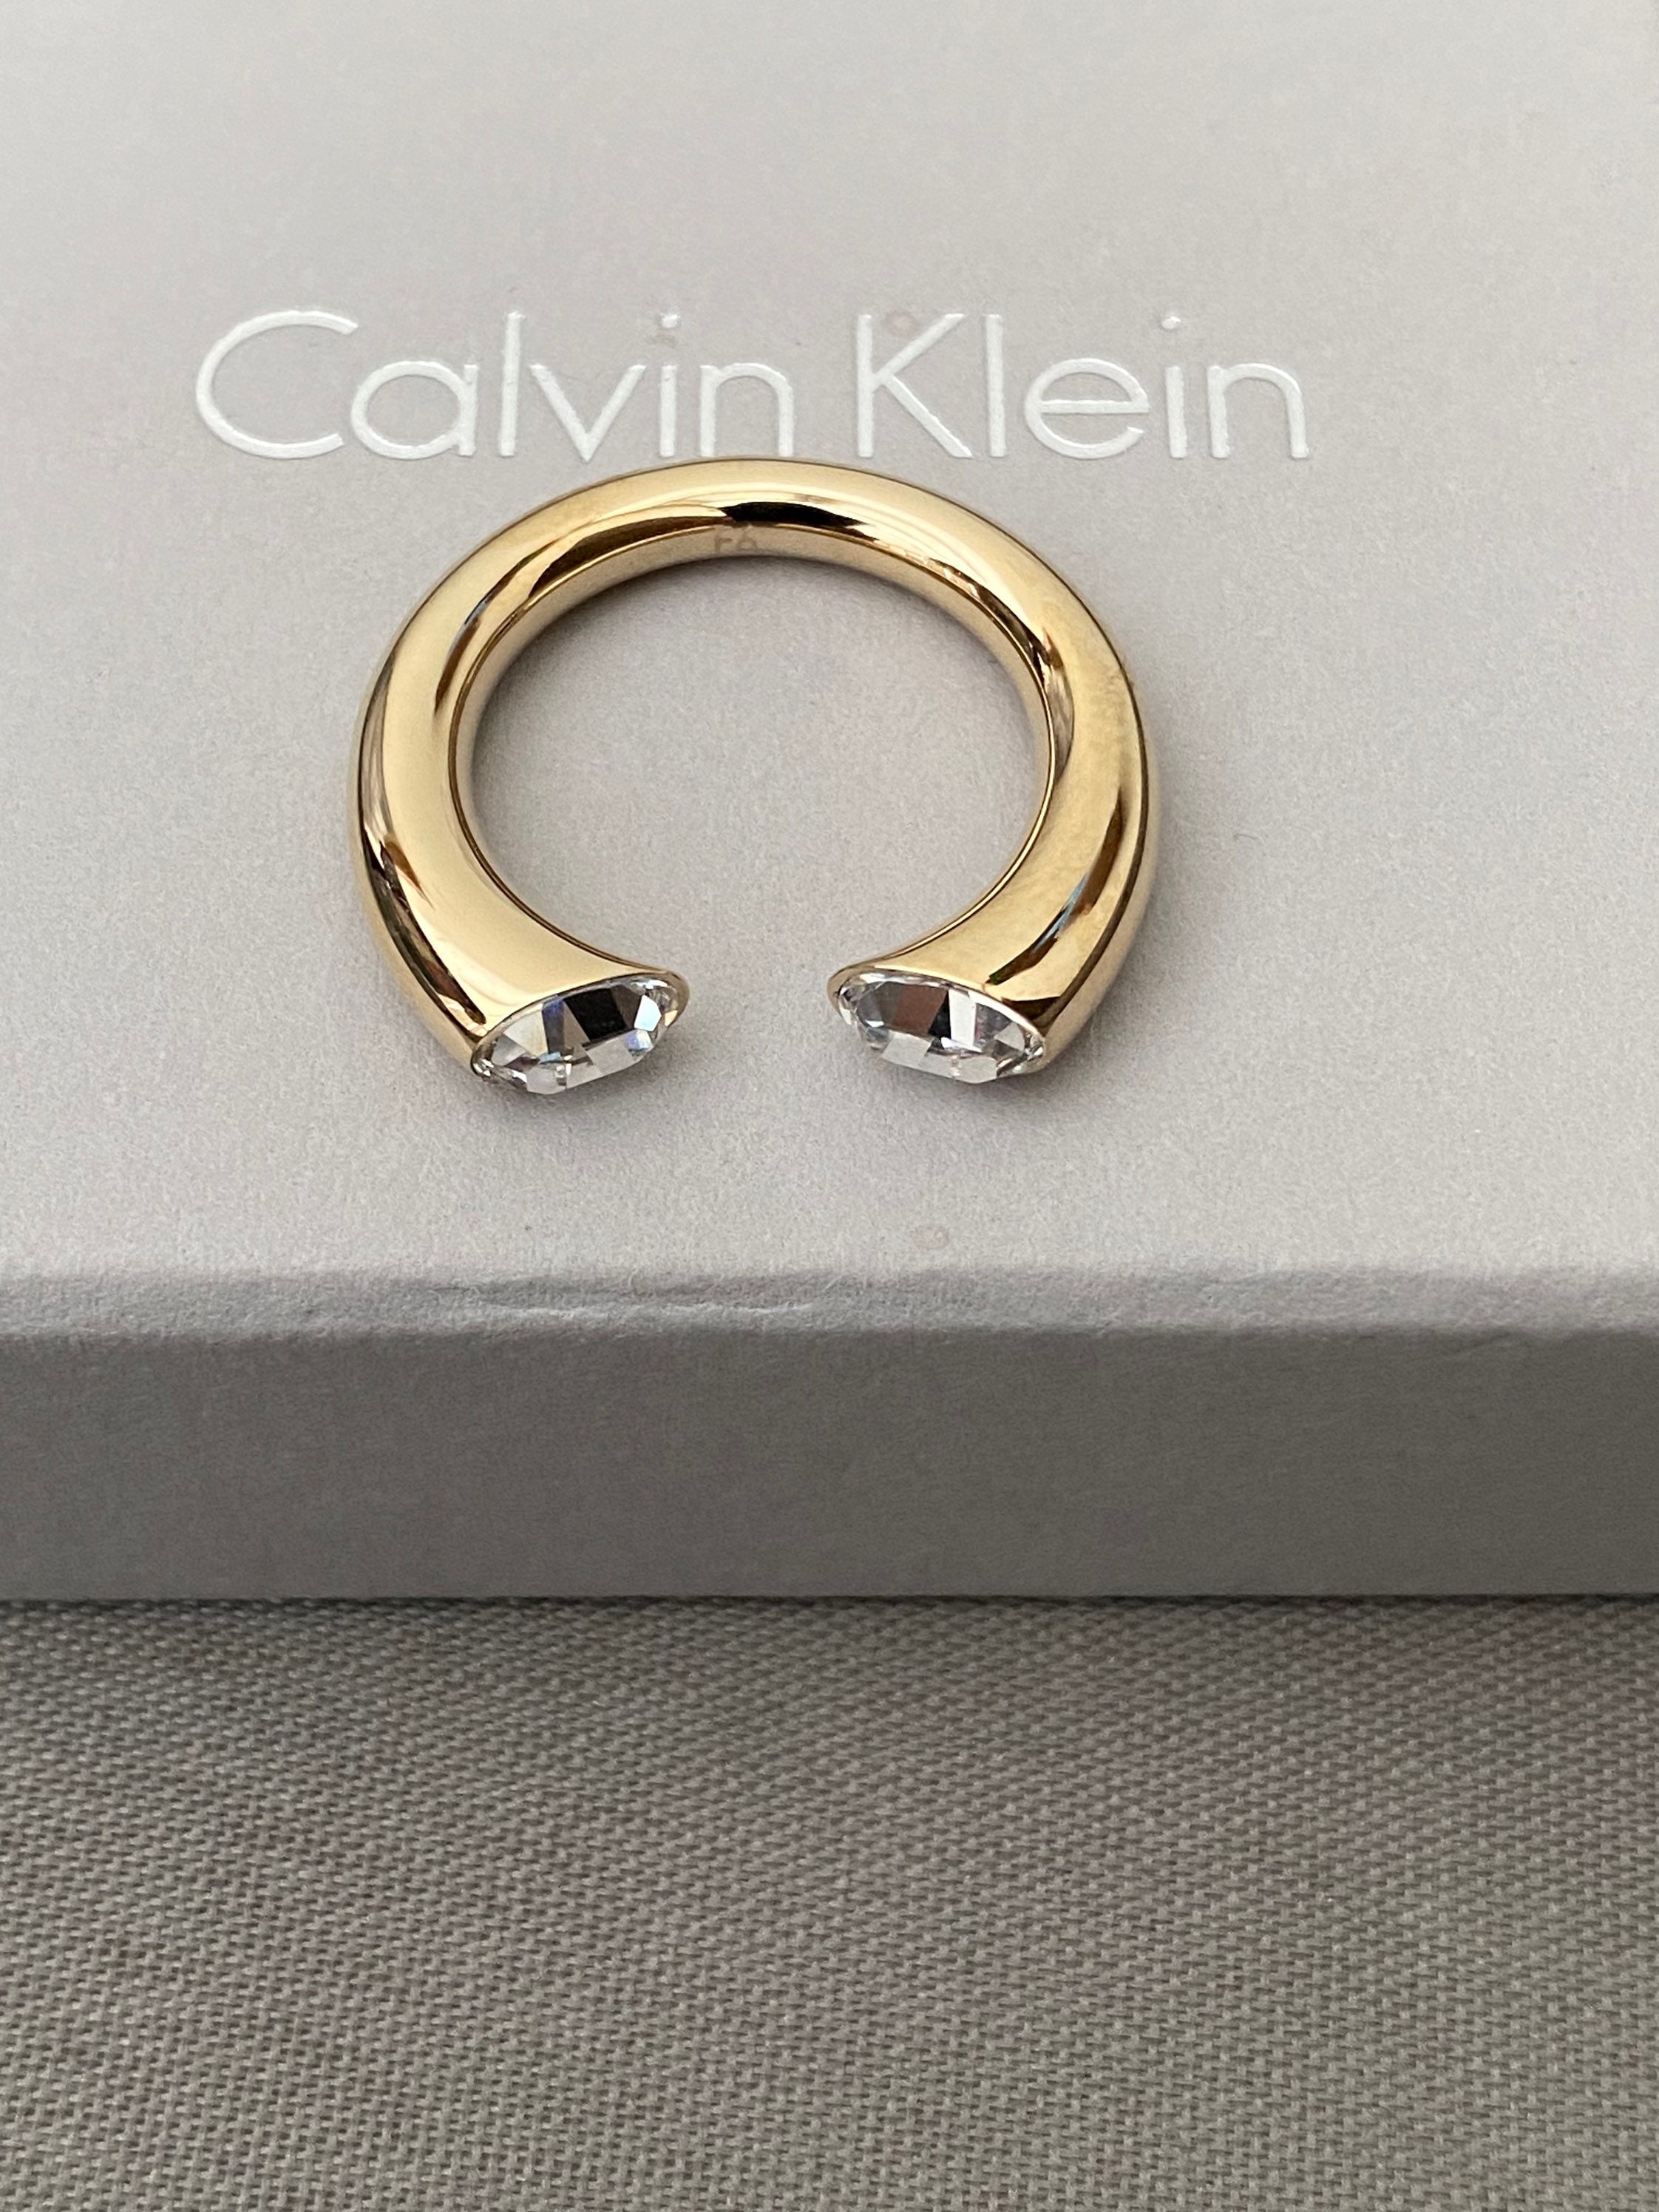 Calvin Klein Ring - Etsy